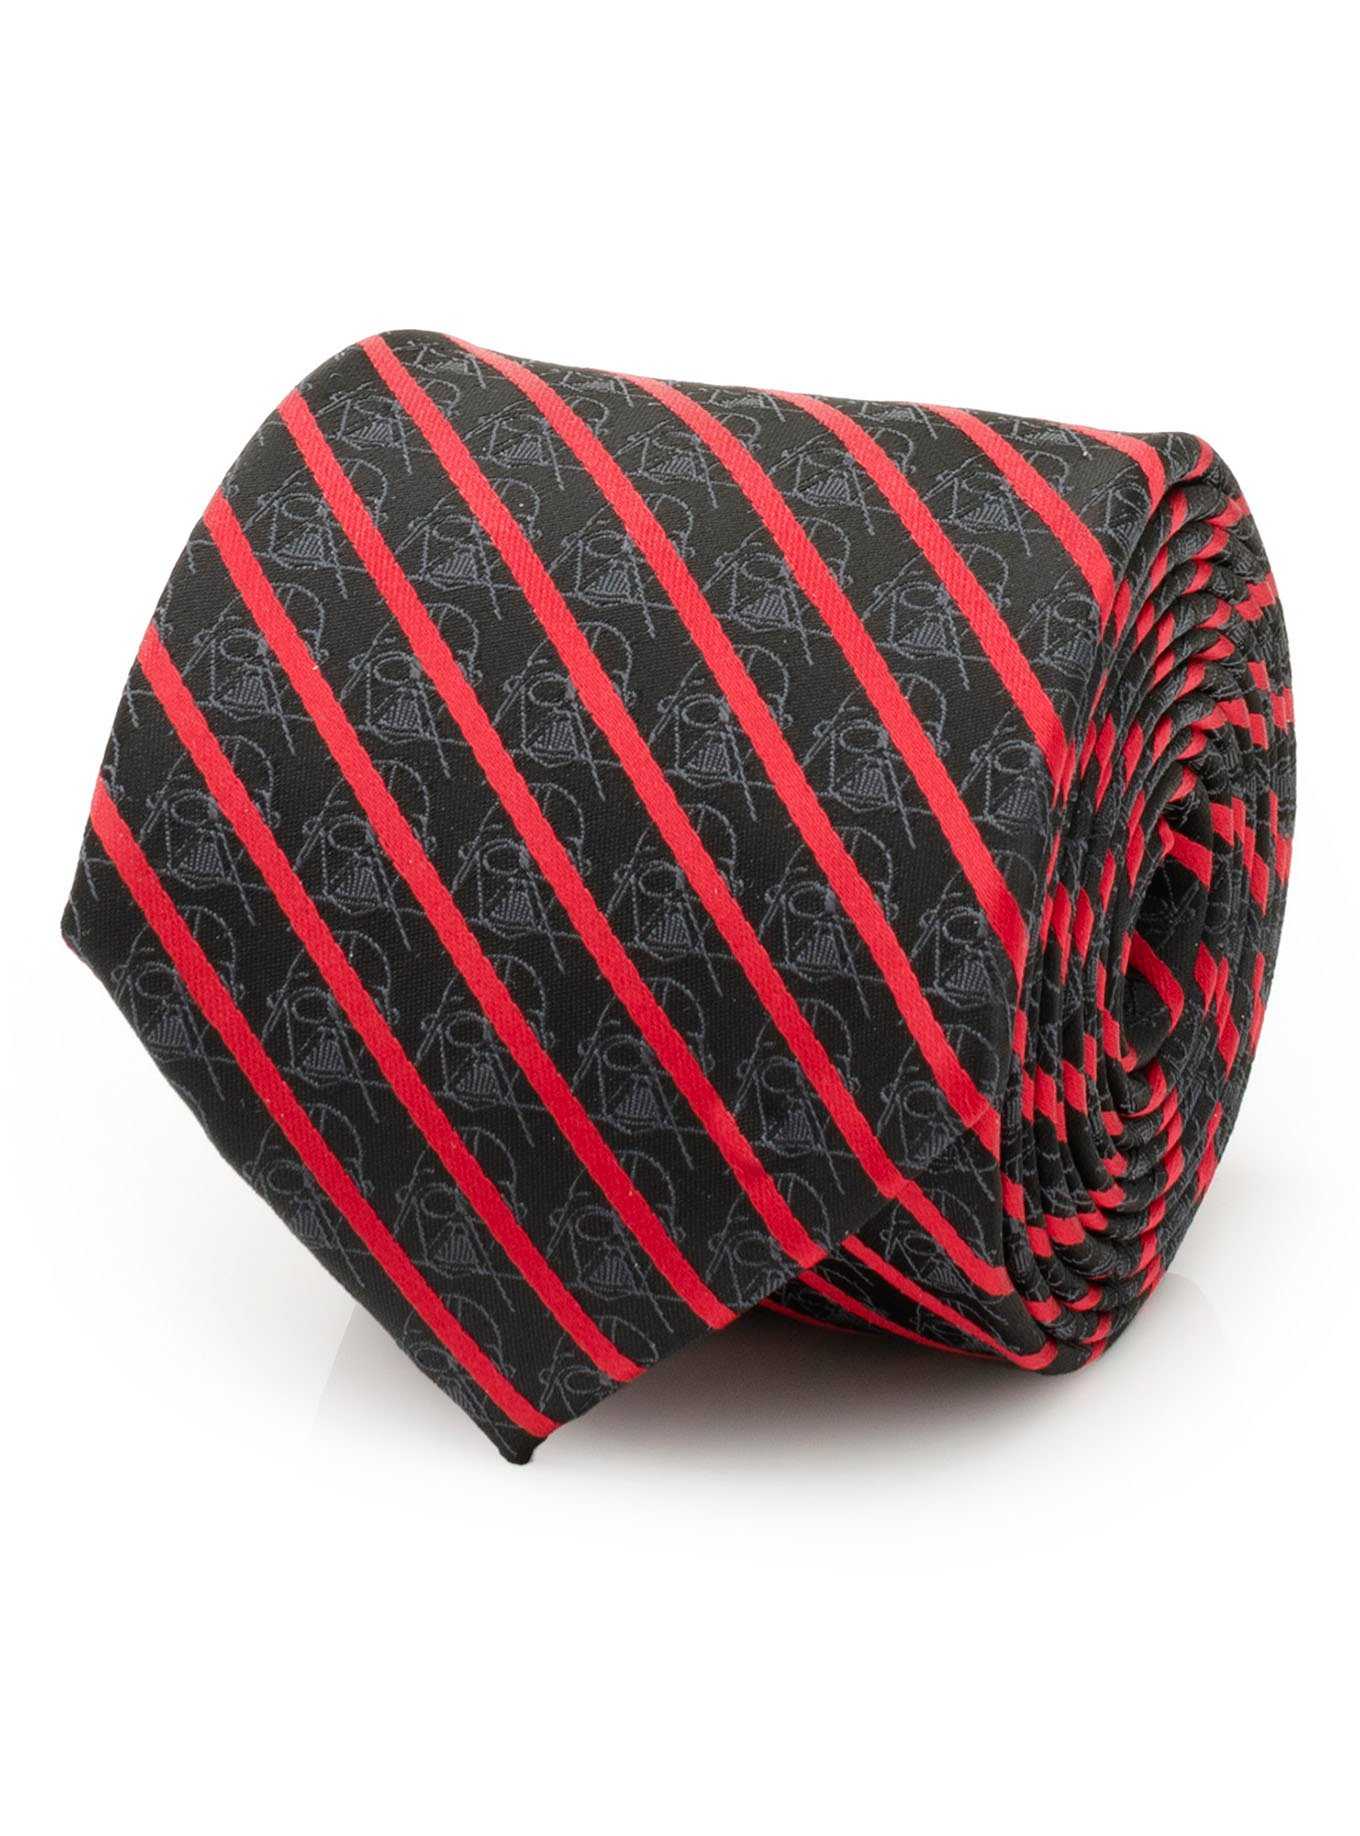 Star Wars Darth Vader Stripe Red Black Men's Tie, , hi-res